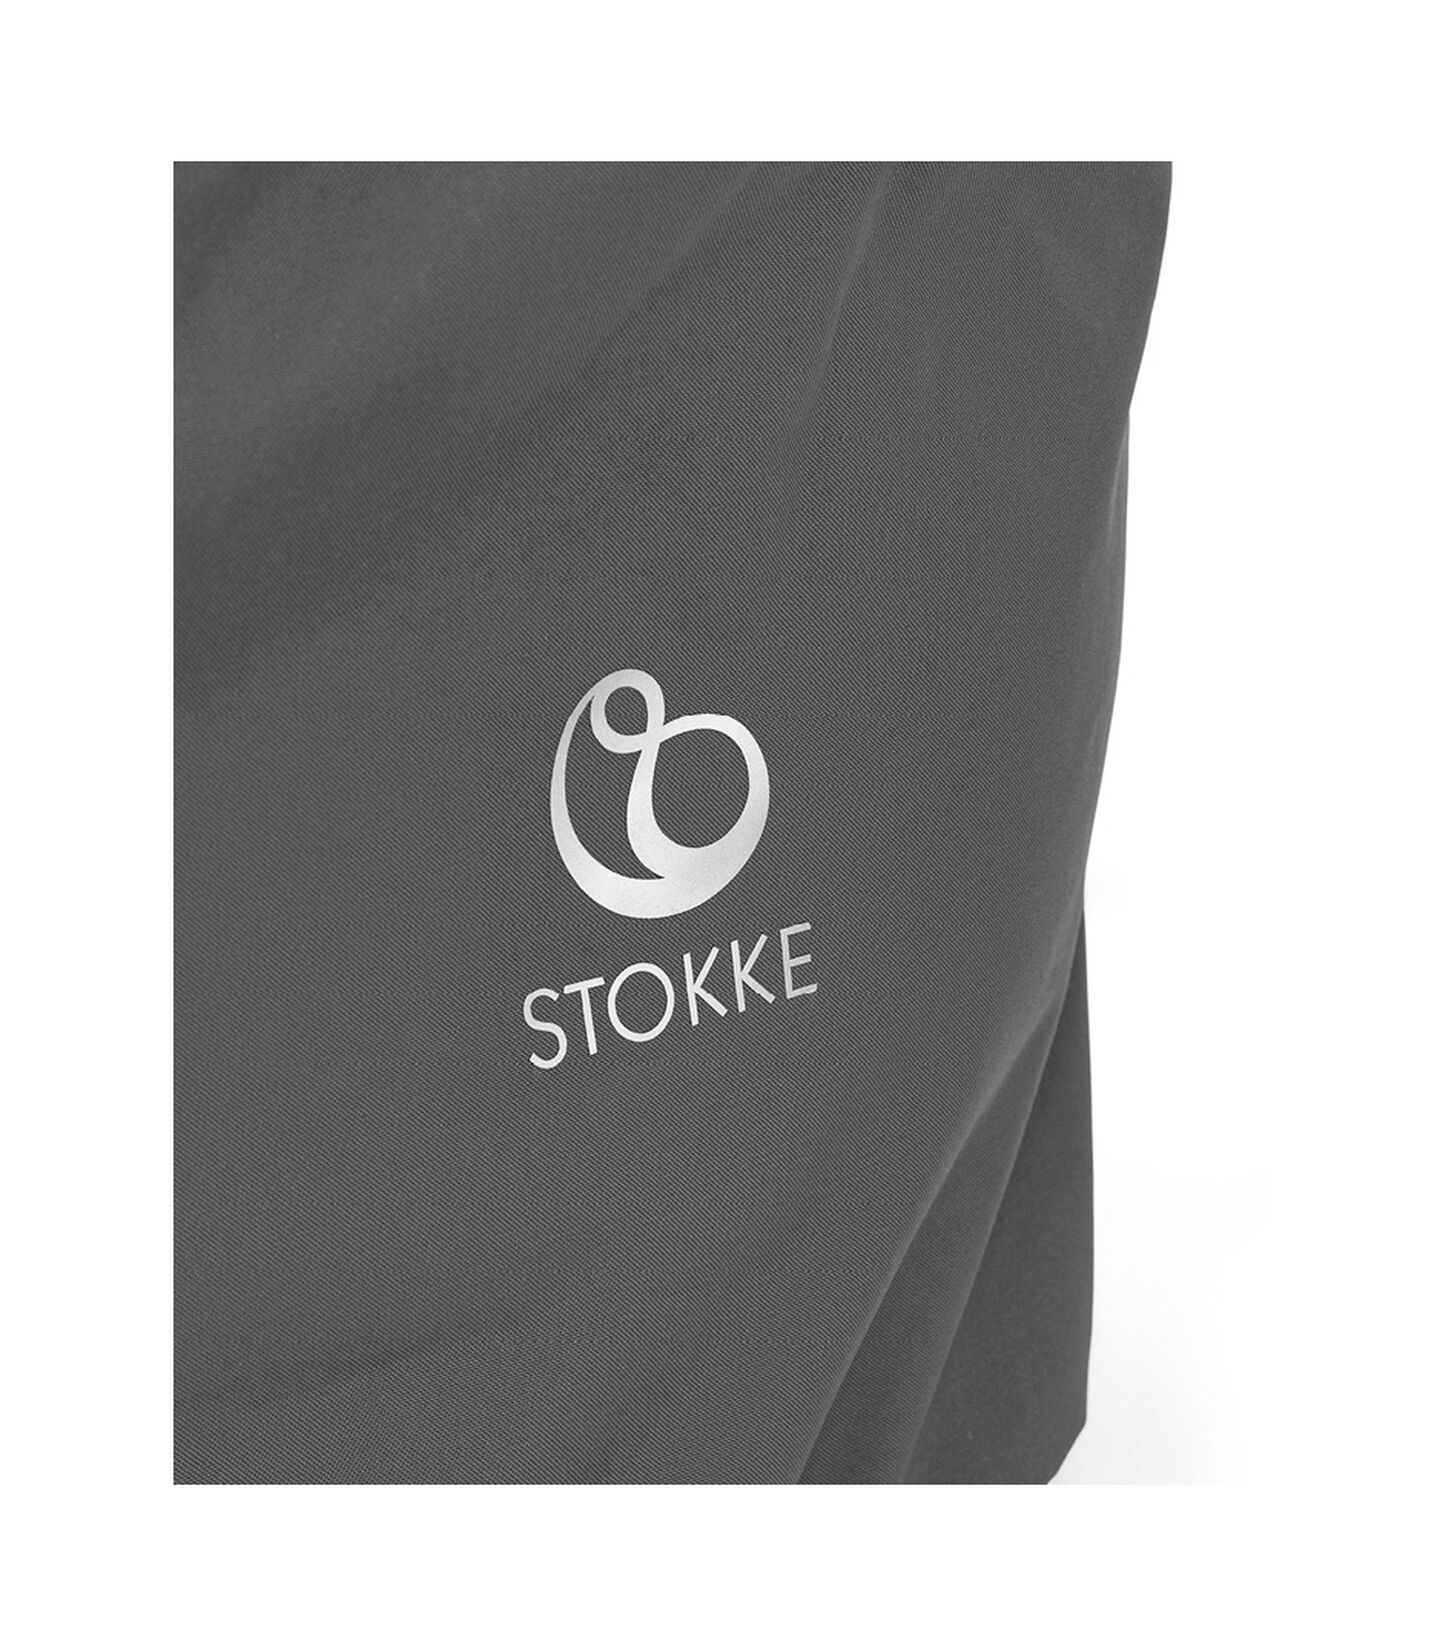 Stokke® Clikk™ Travel Bag Dark Grey, ダークグレー, mainview view 4